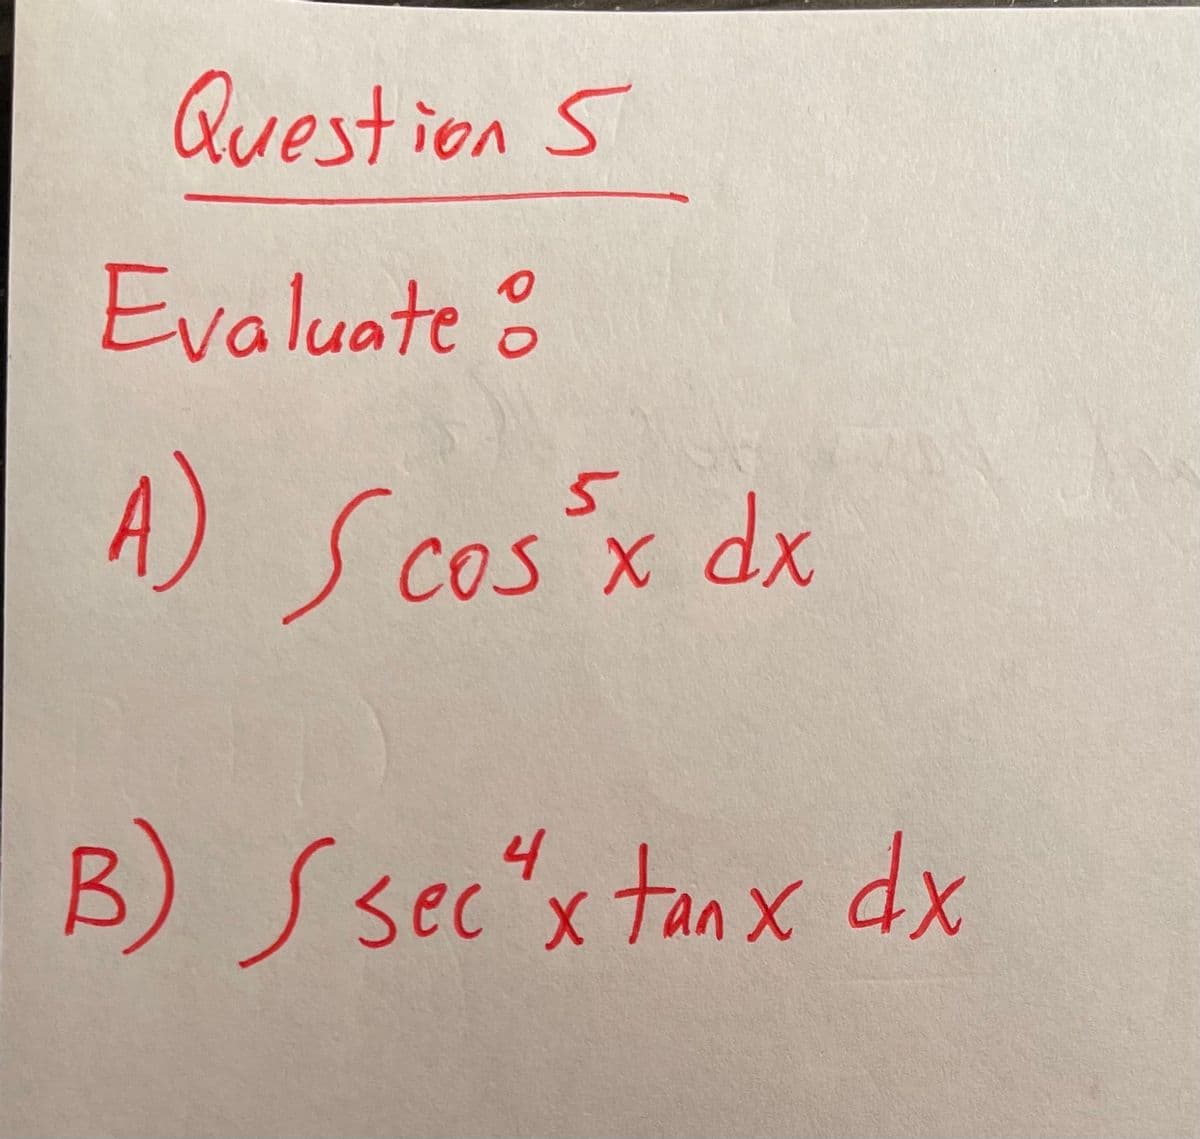 Question S
Evaluate
A) Scos³x dx
O
4
B) Ssecx tanx dx